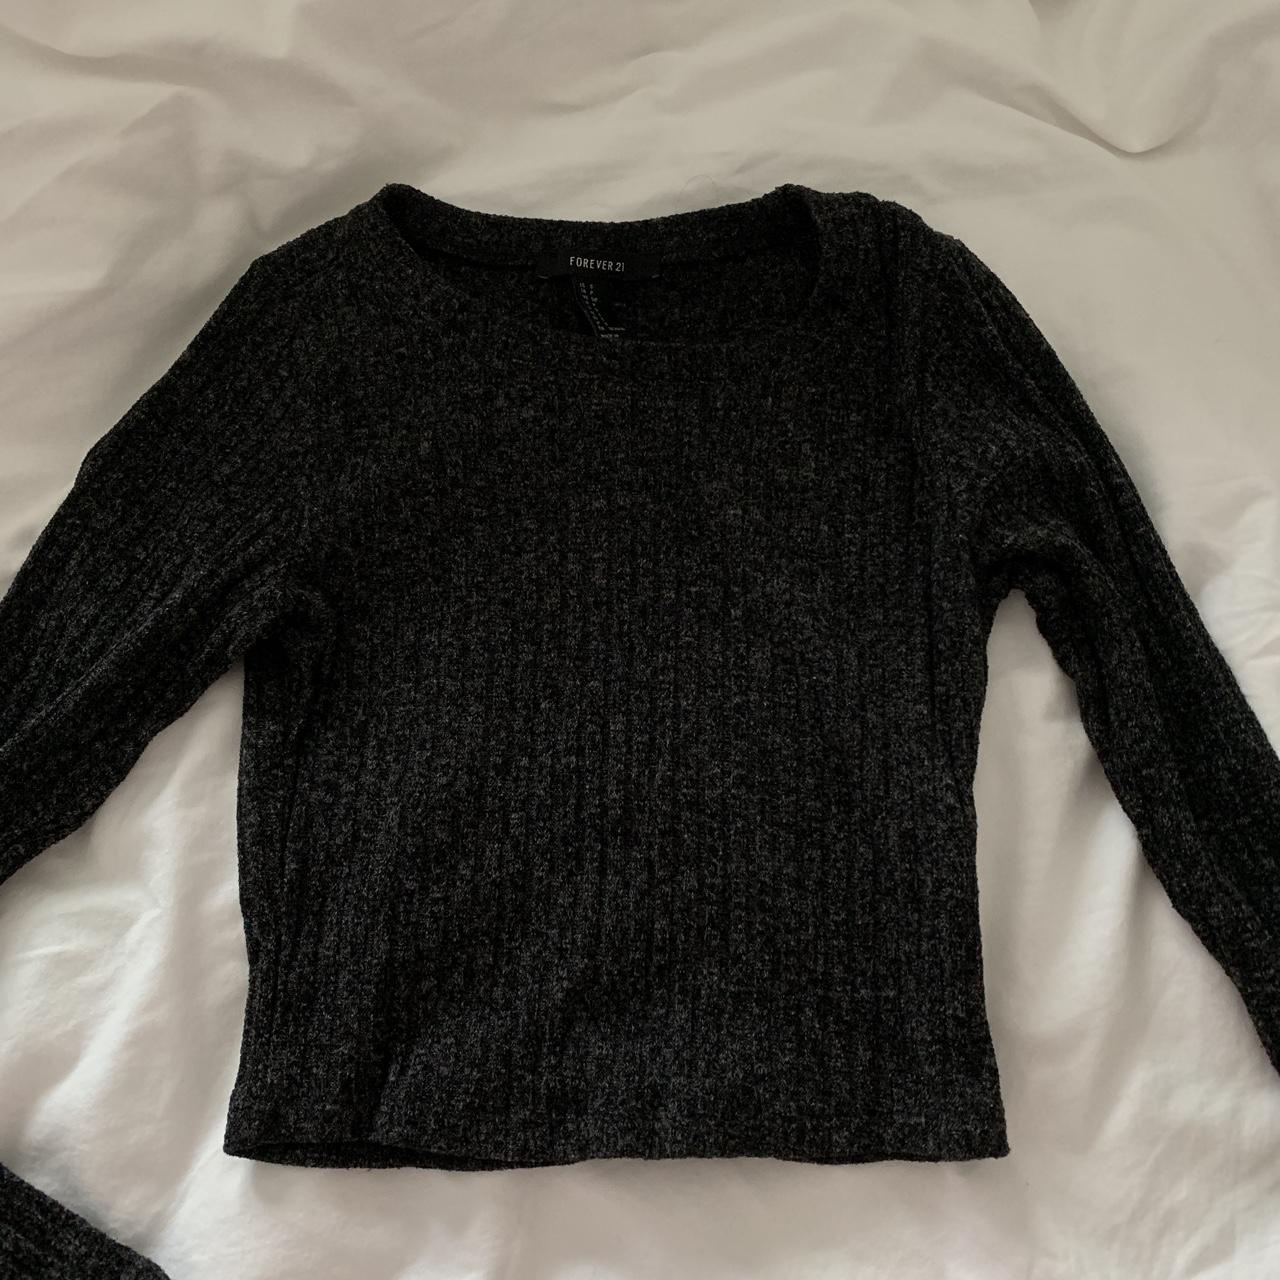 Cropped long sleeve black/grey fuzzy sweater from... - Depop